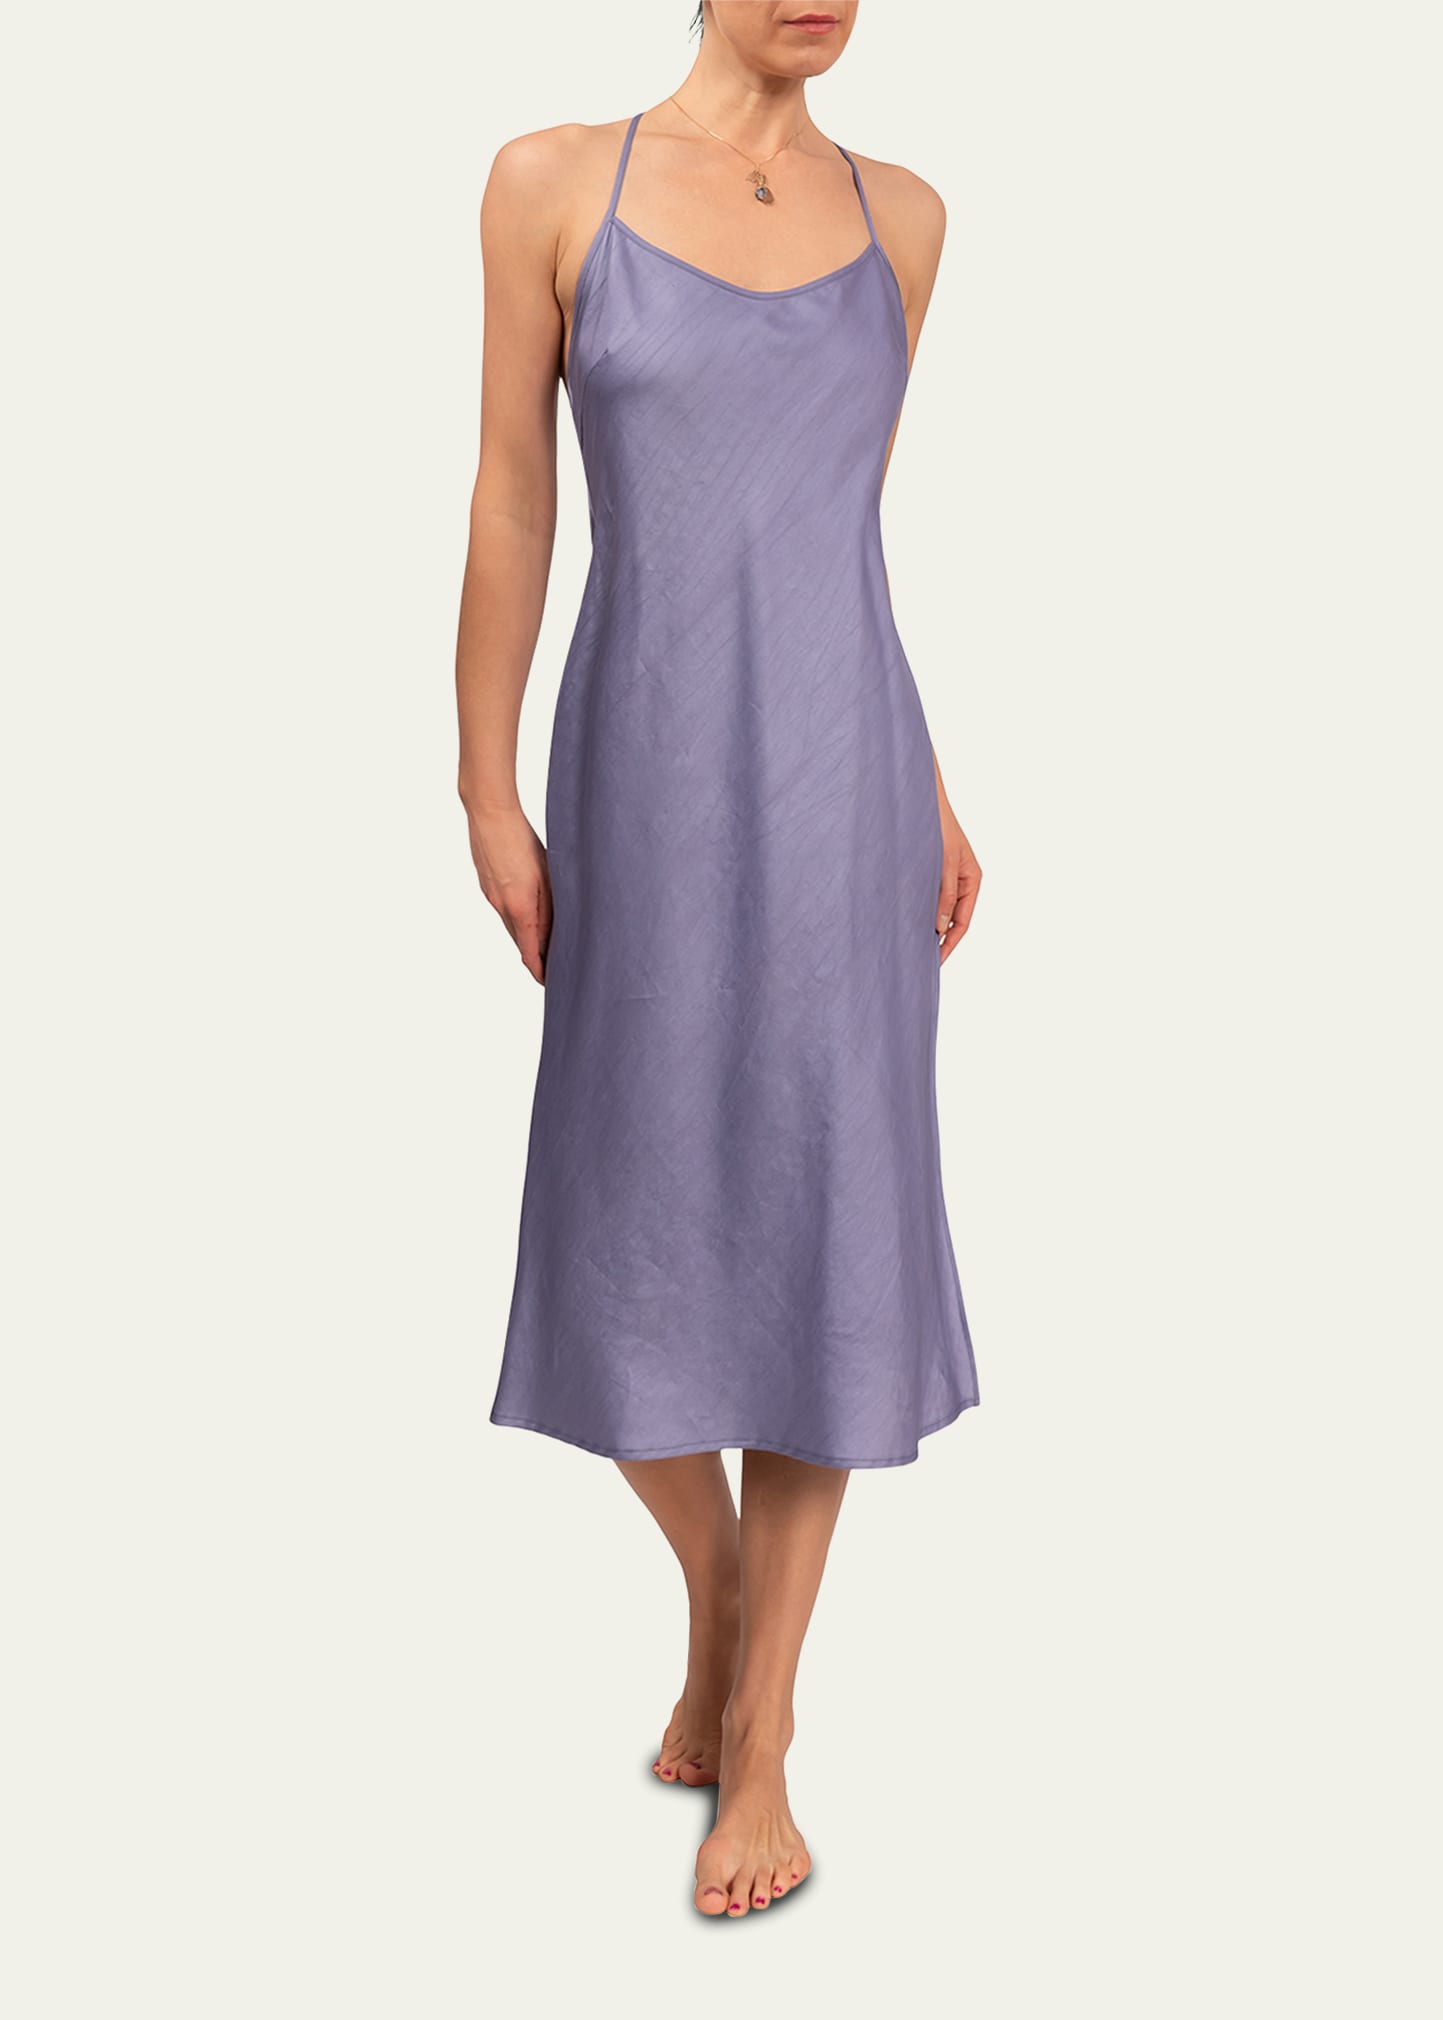 Everyday Ritual Sloan T-Back Nightgown